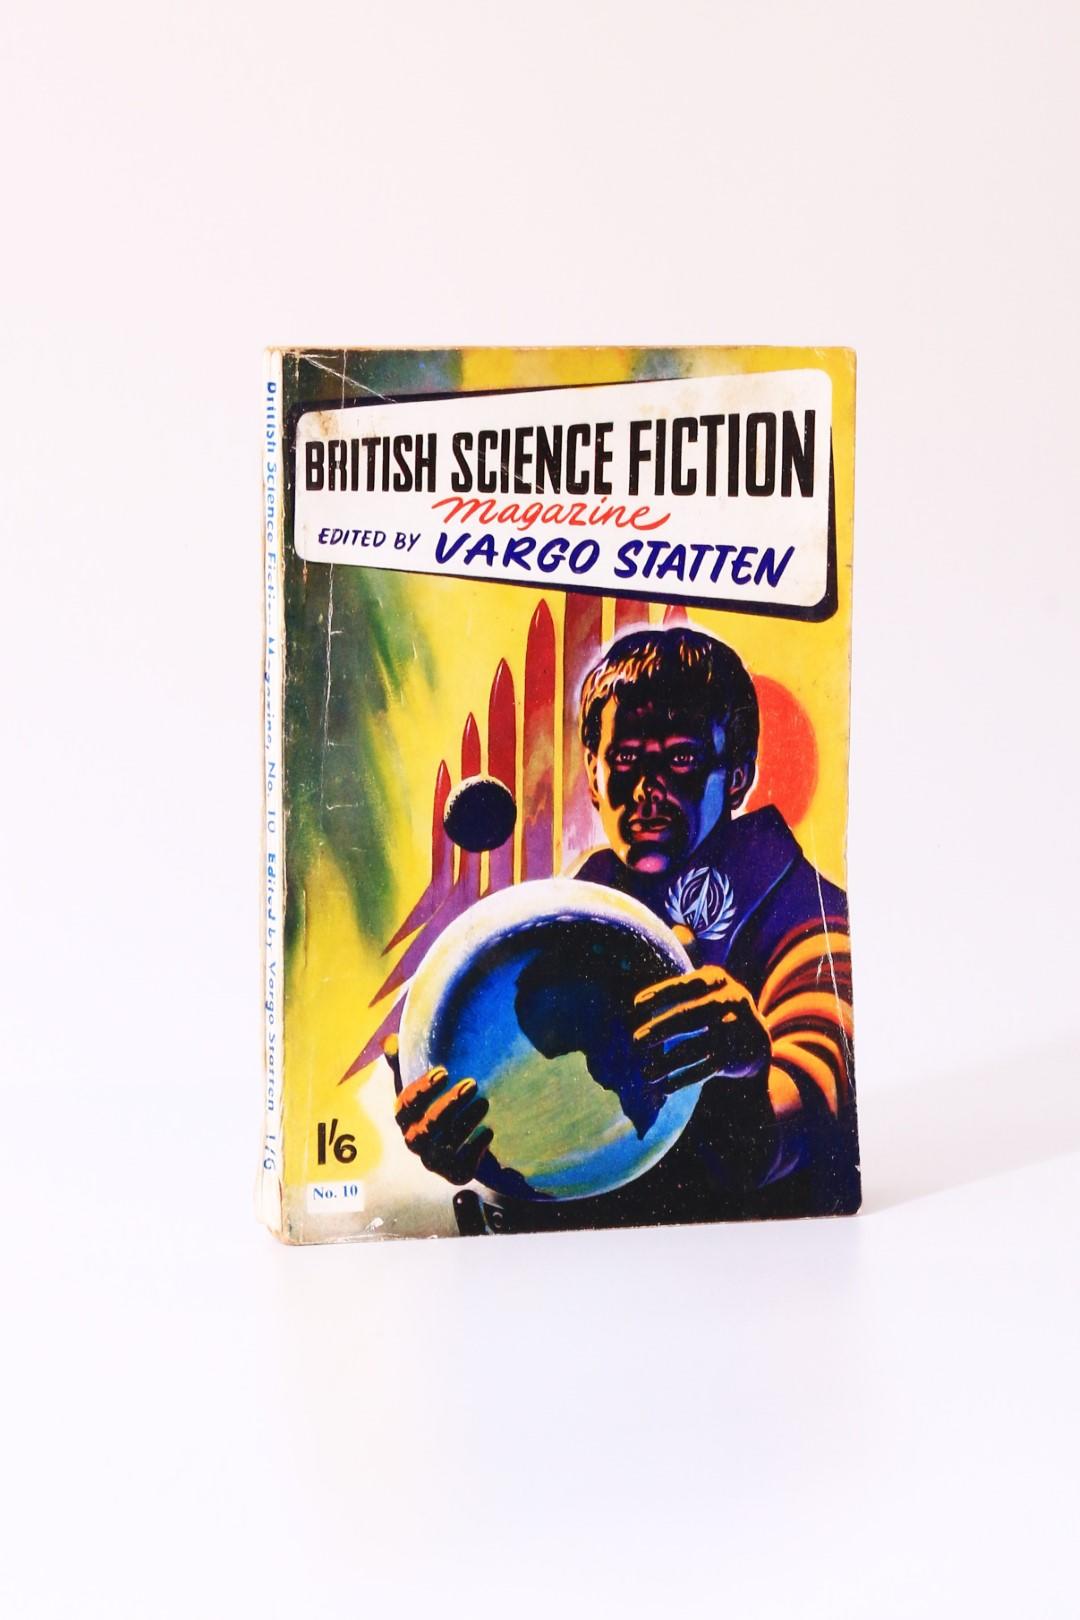 Vargo Statten [ed.] - British Science Fiction Magazine [Vol 1. No. 10] - Dragon Publications, 1954, First Edition.